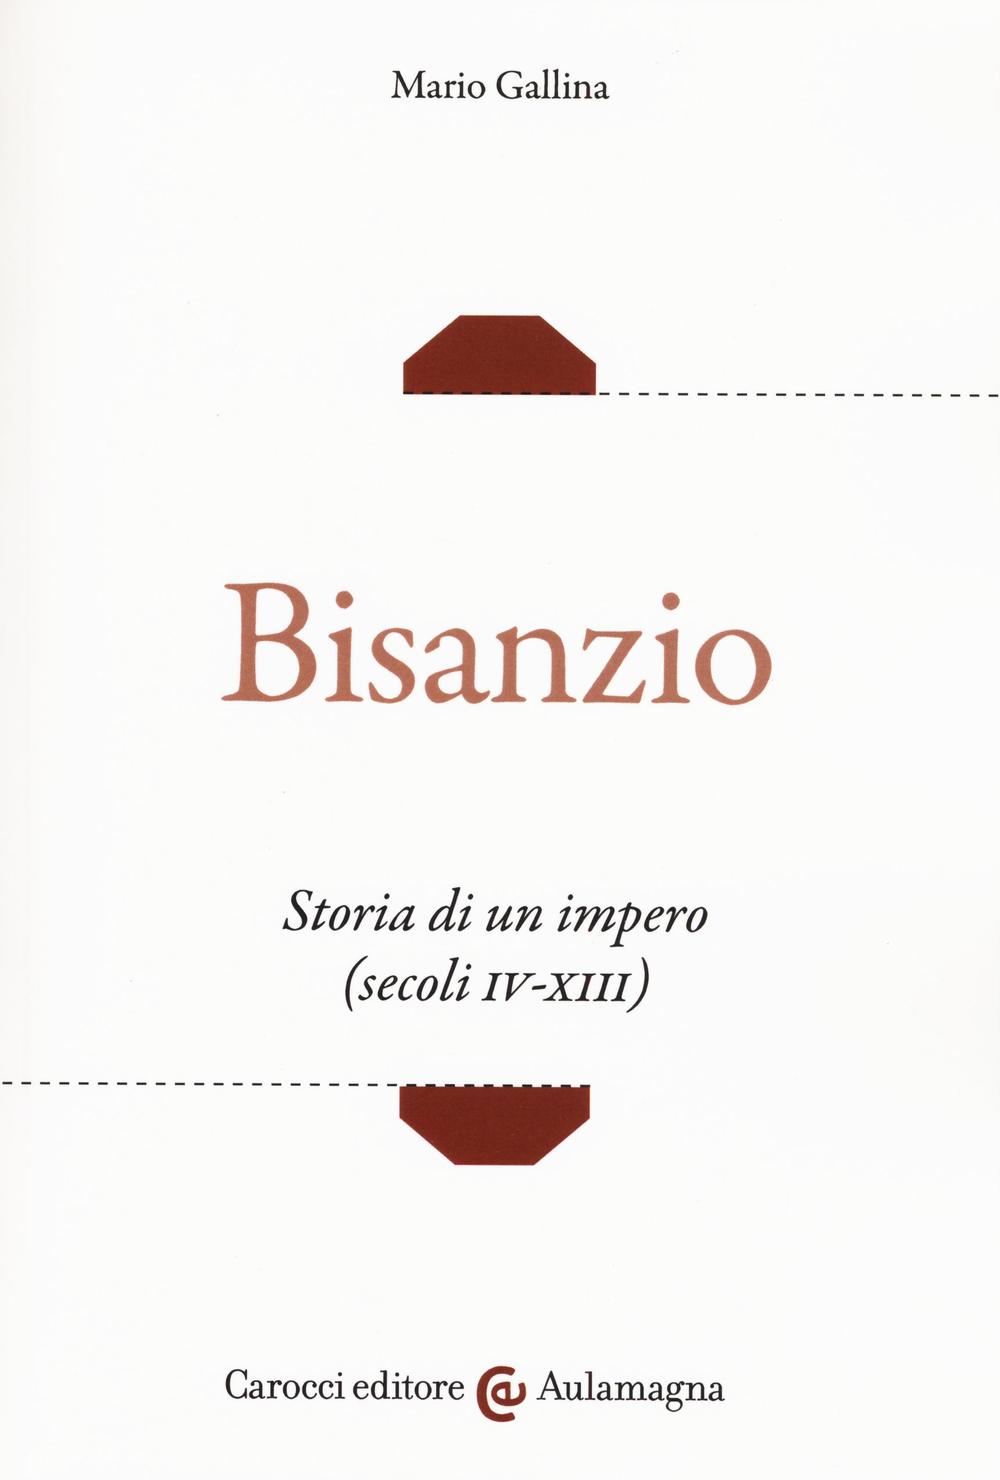 Книга Bisanzio. Storia di un impero (secoli IV-XIII) Mario Gallina